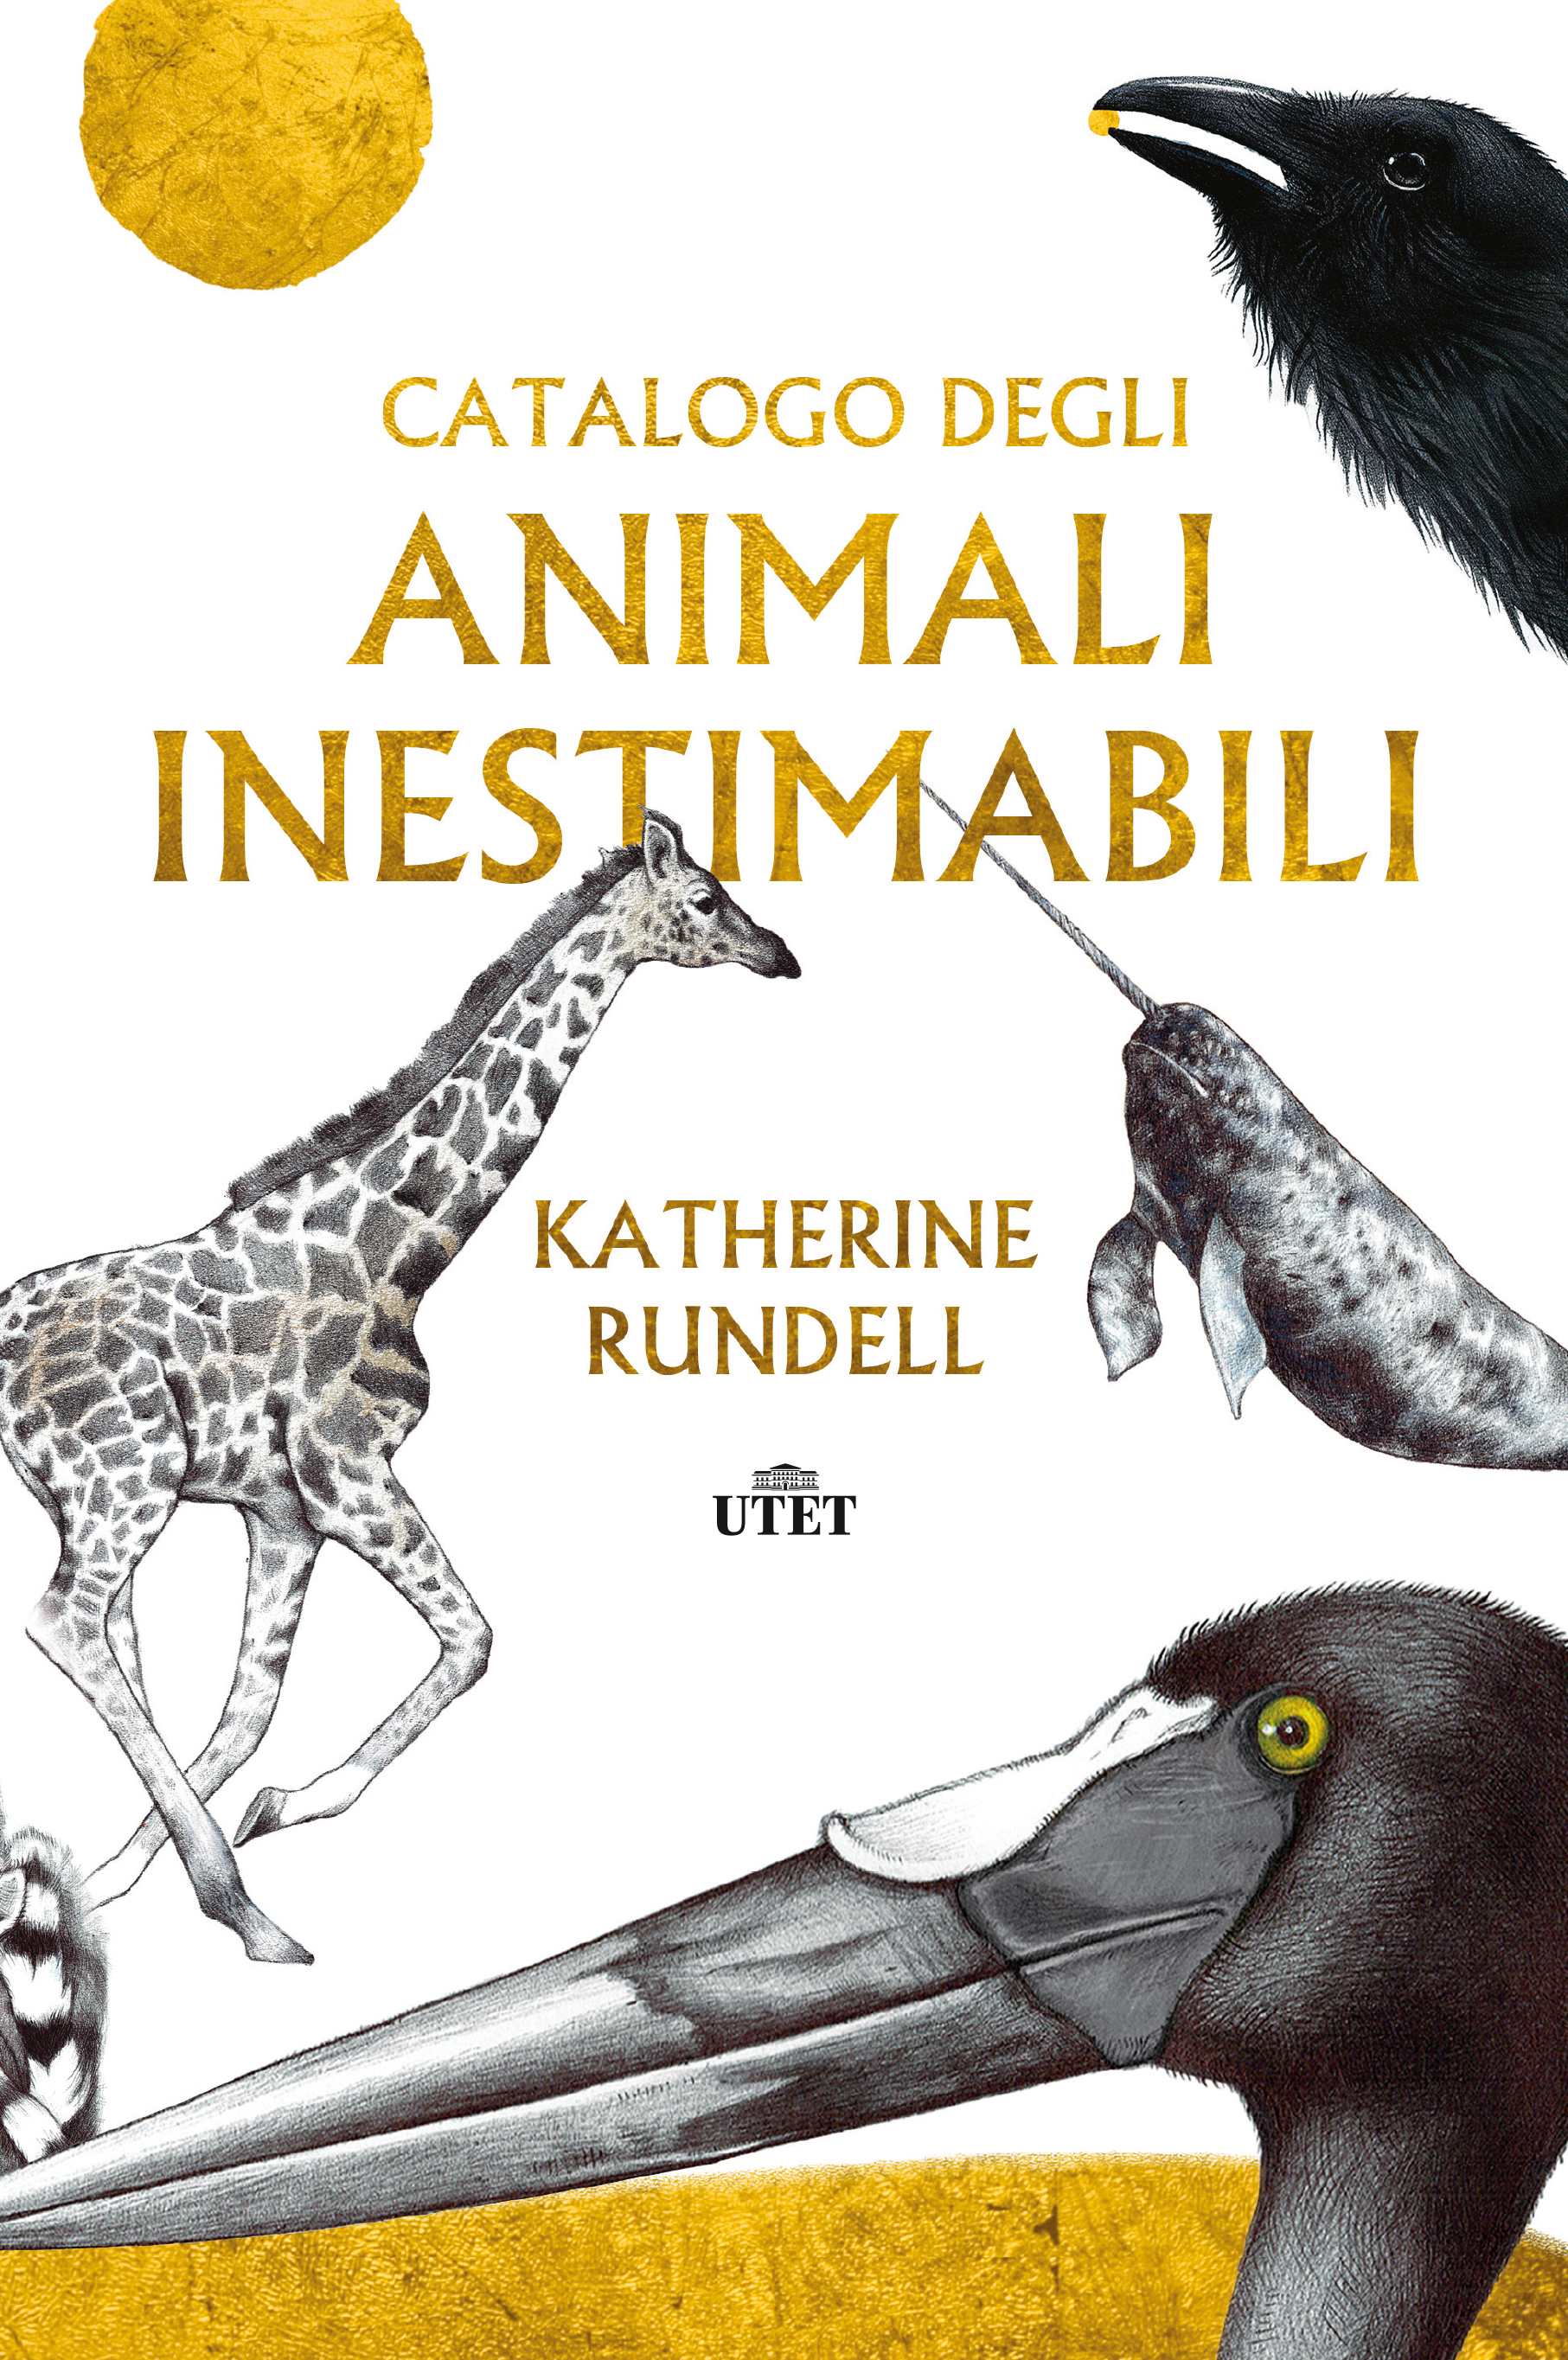 Catalogo degli animali inestimabili di Katherine Rundell